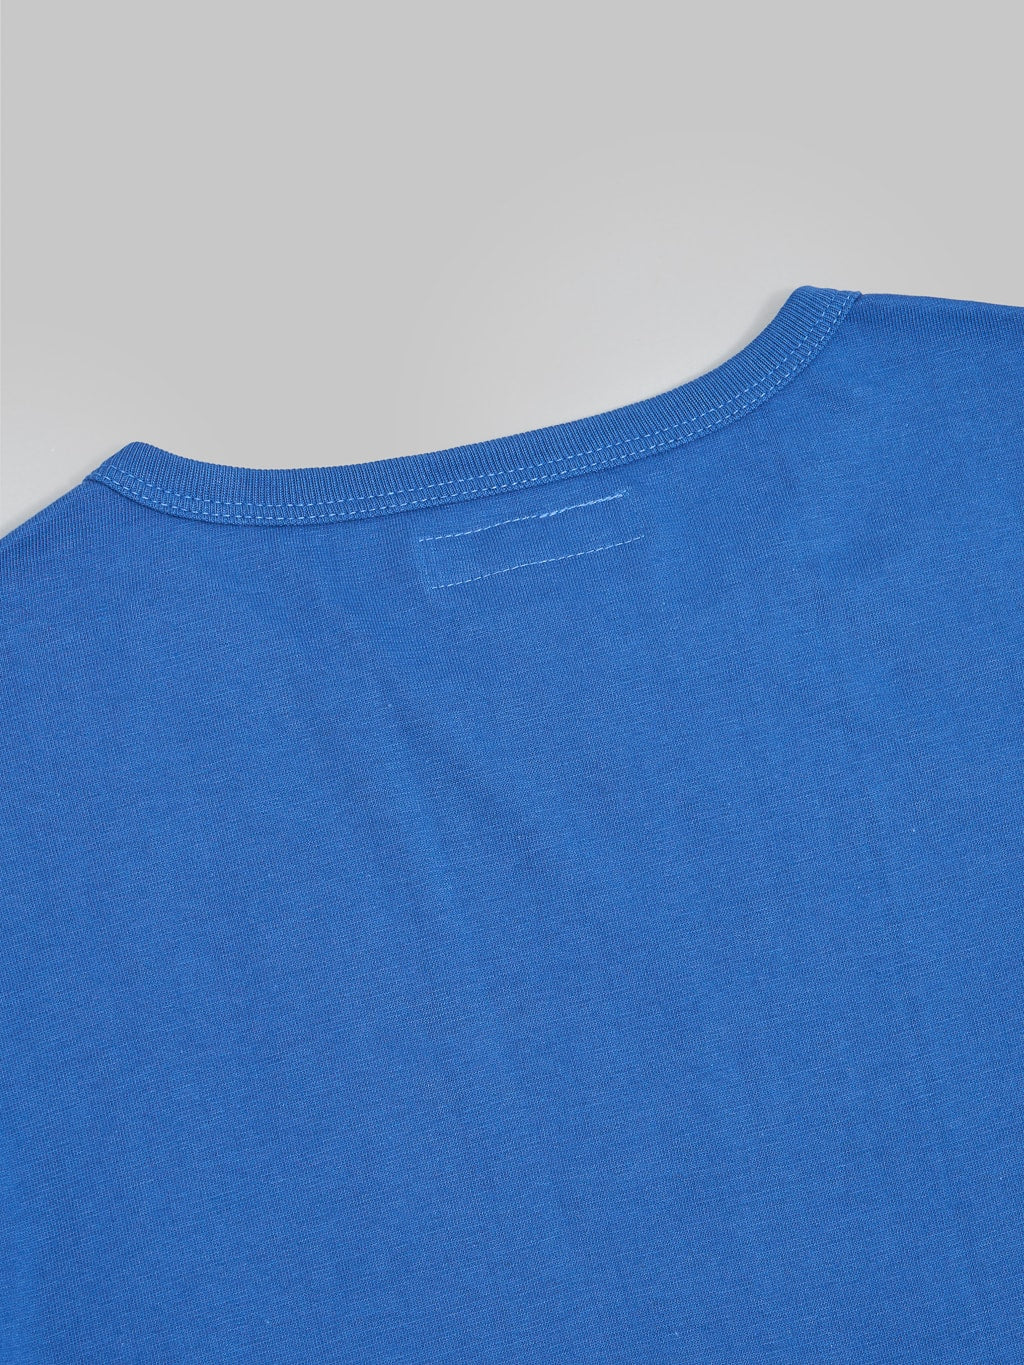 merz b schwanen 215 heavyweight loopwheeled tshirt vintage blue stitching